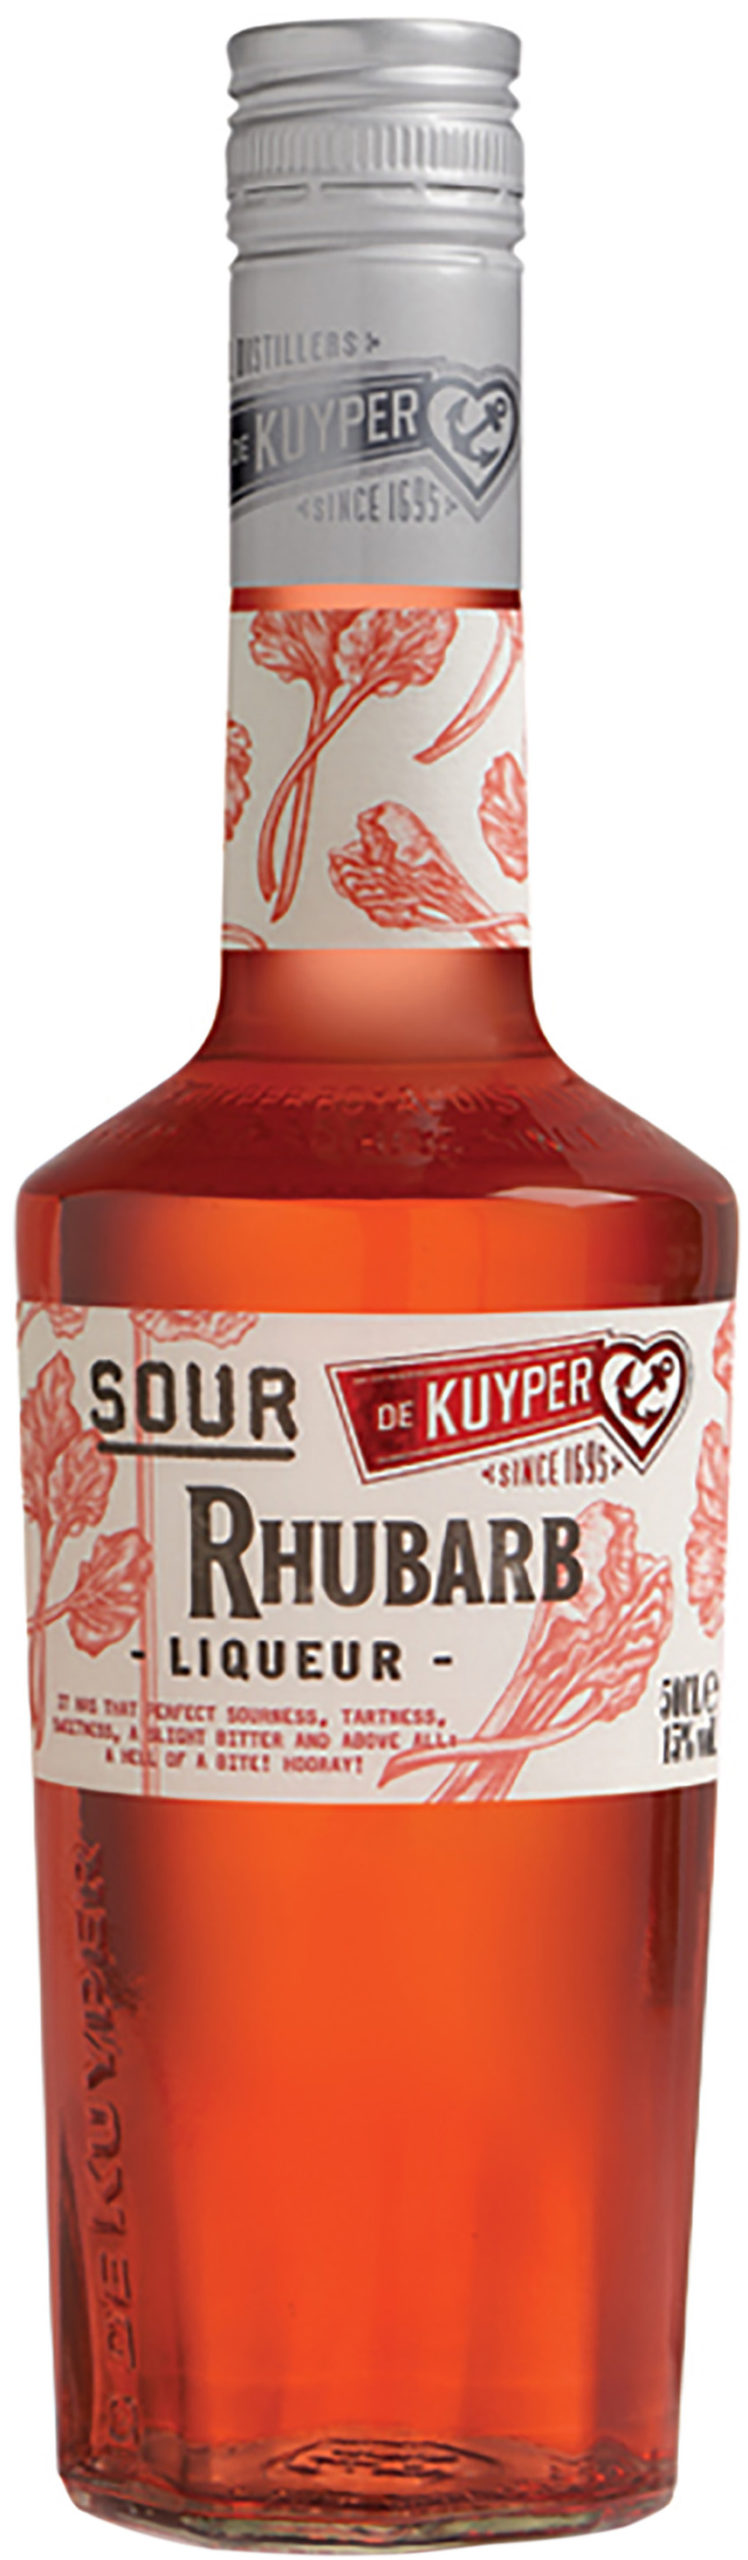 De Kuyper Sour Rhubarb